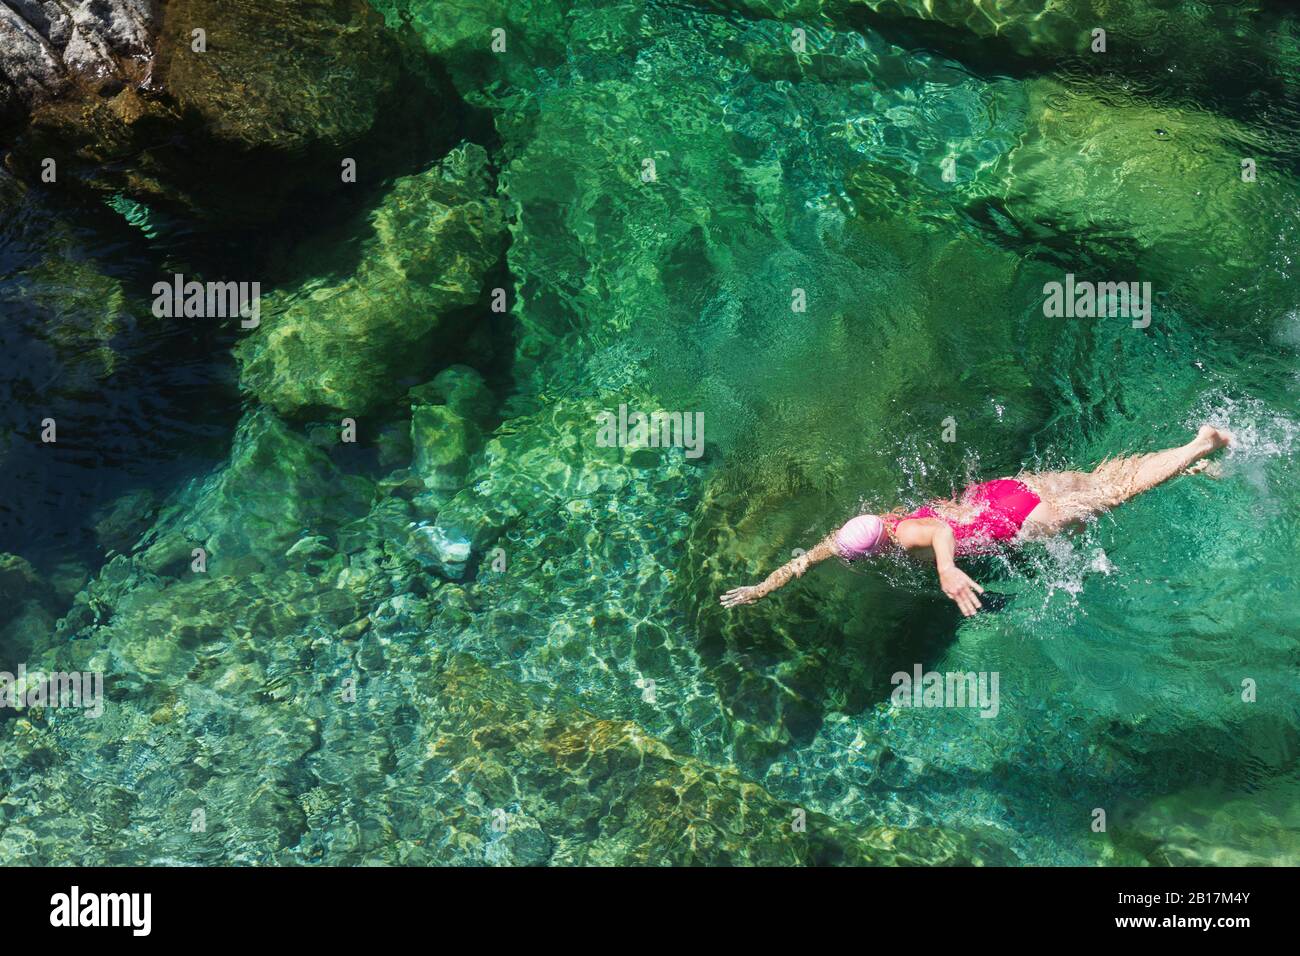 Woman swimming in refreshing Verszasca river Stock Photo